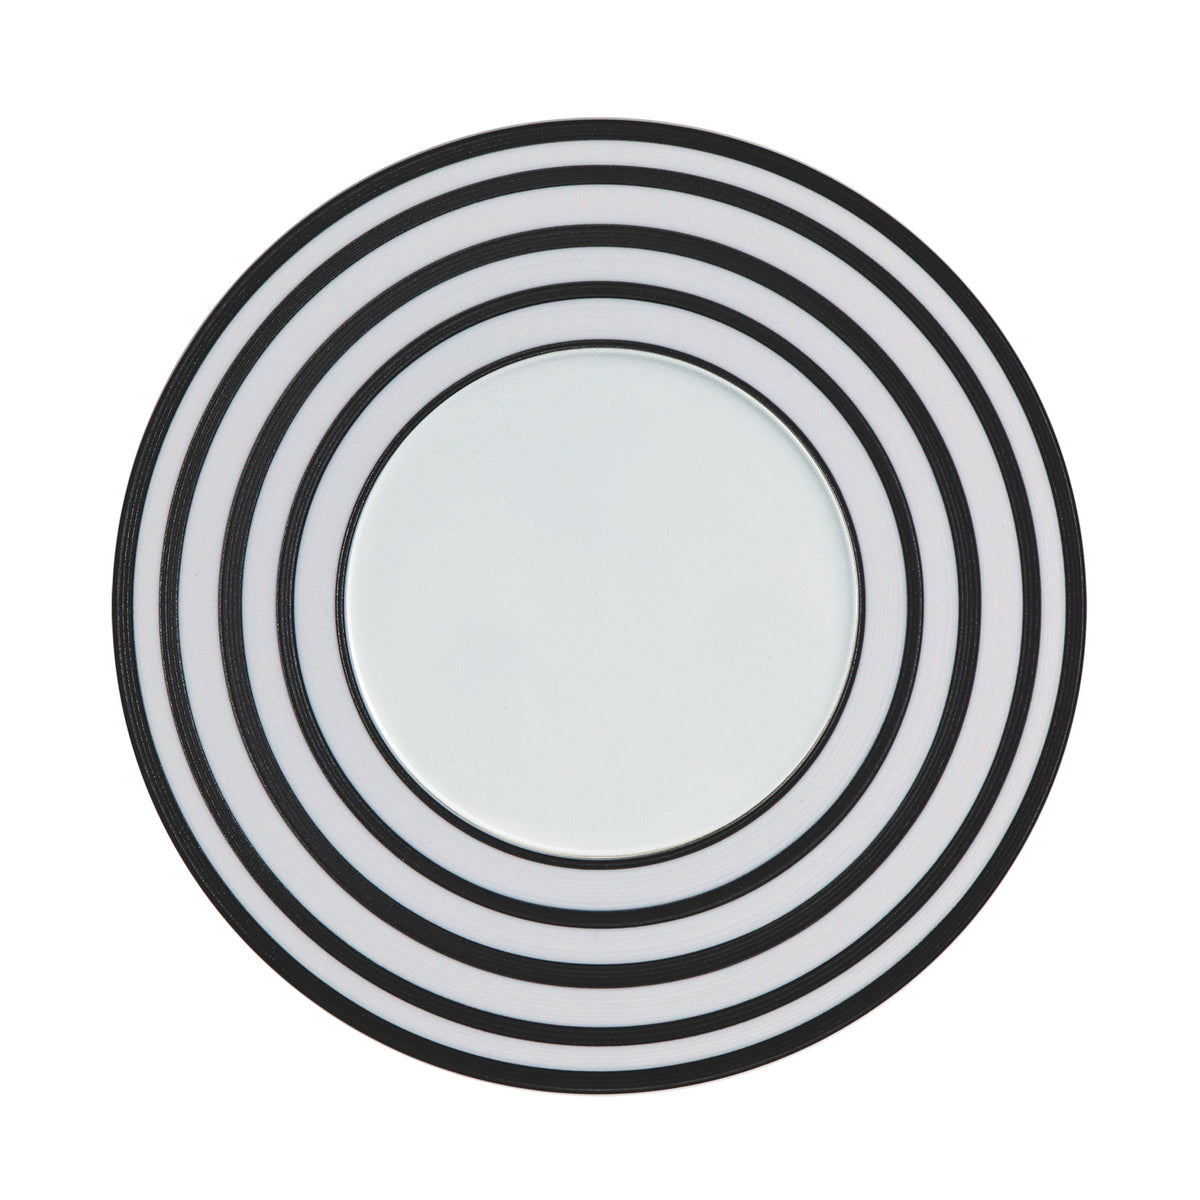 HEMISPHERE Striped Black Bakelite - 29 cm plate